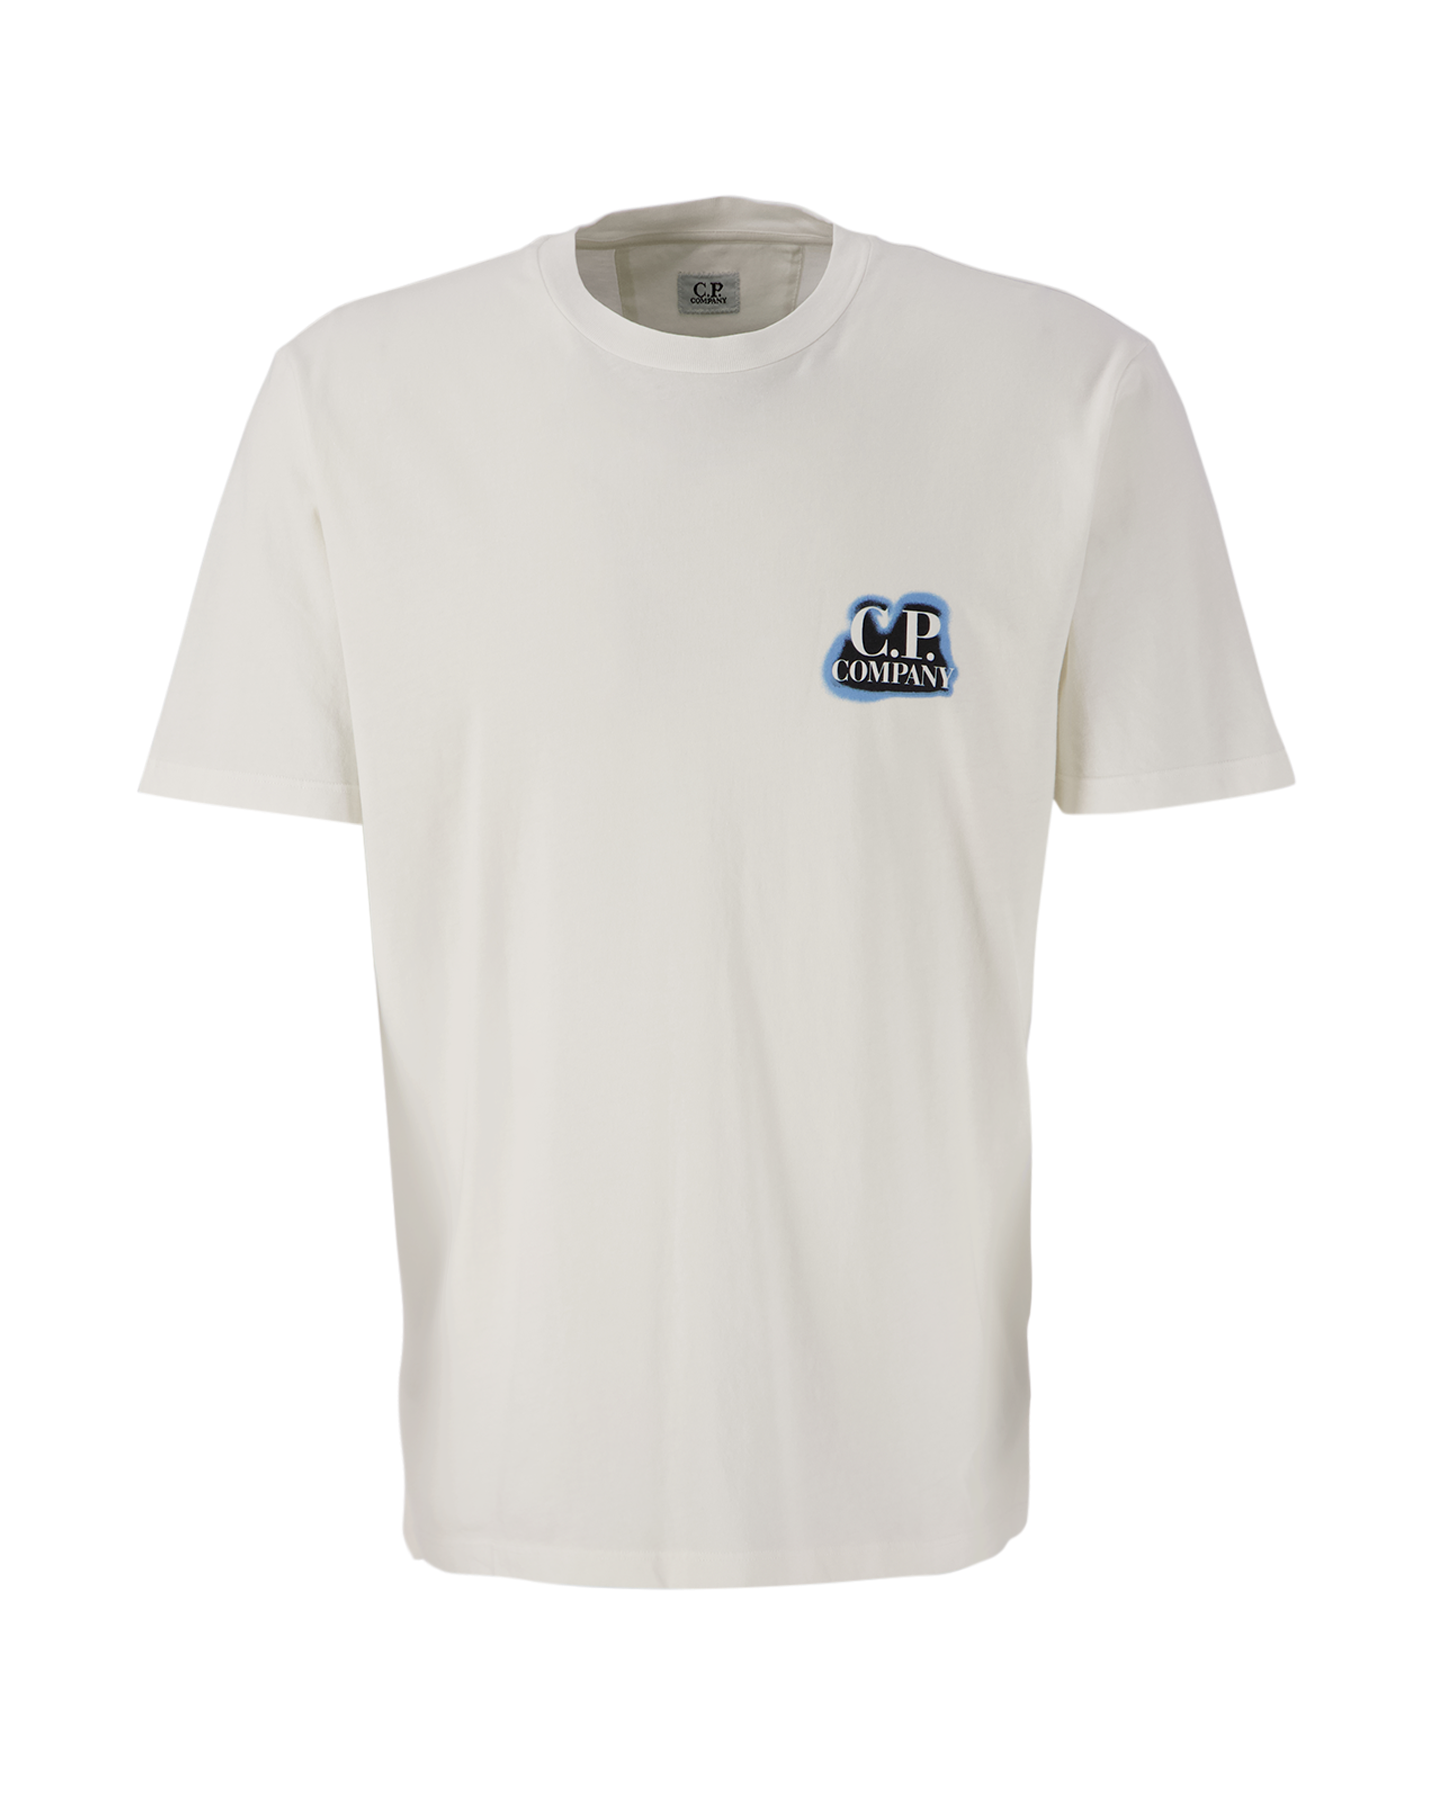 C.P. Company 24/1 Jersey Artisanal British Sailor T-Shirt OFFWHITE 2